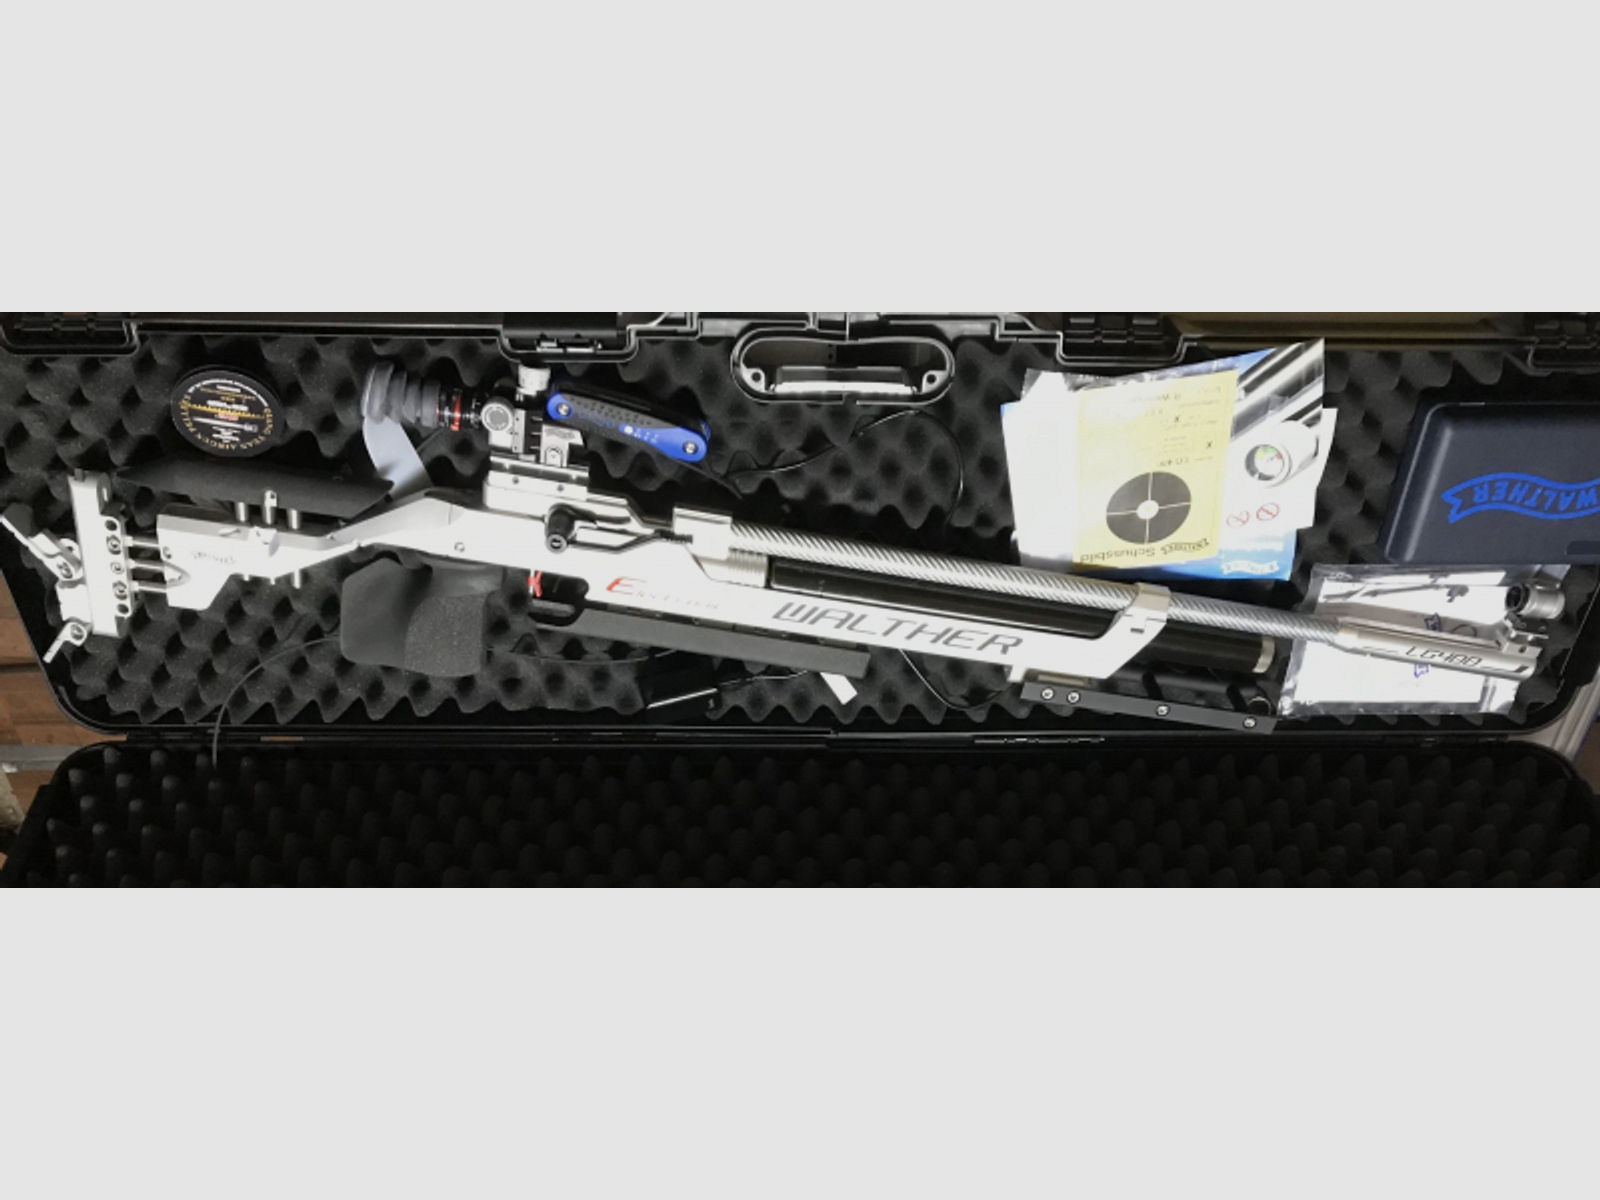 Match Luftgewehr: Walther LG400 E Expert Auflage mit elektronischem Abzug